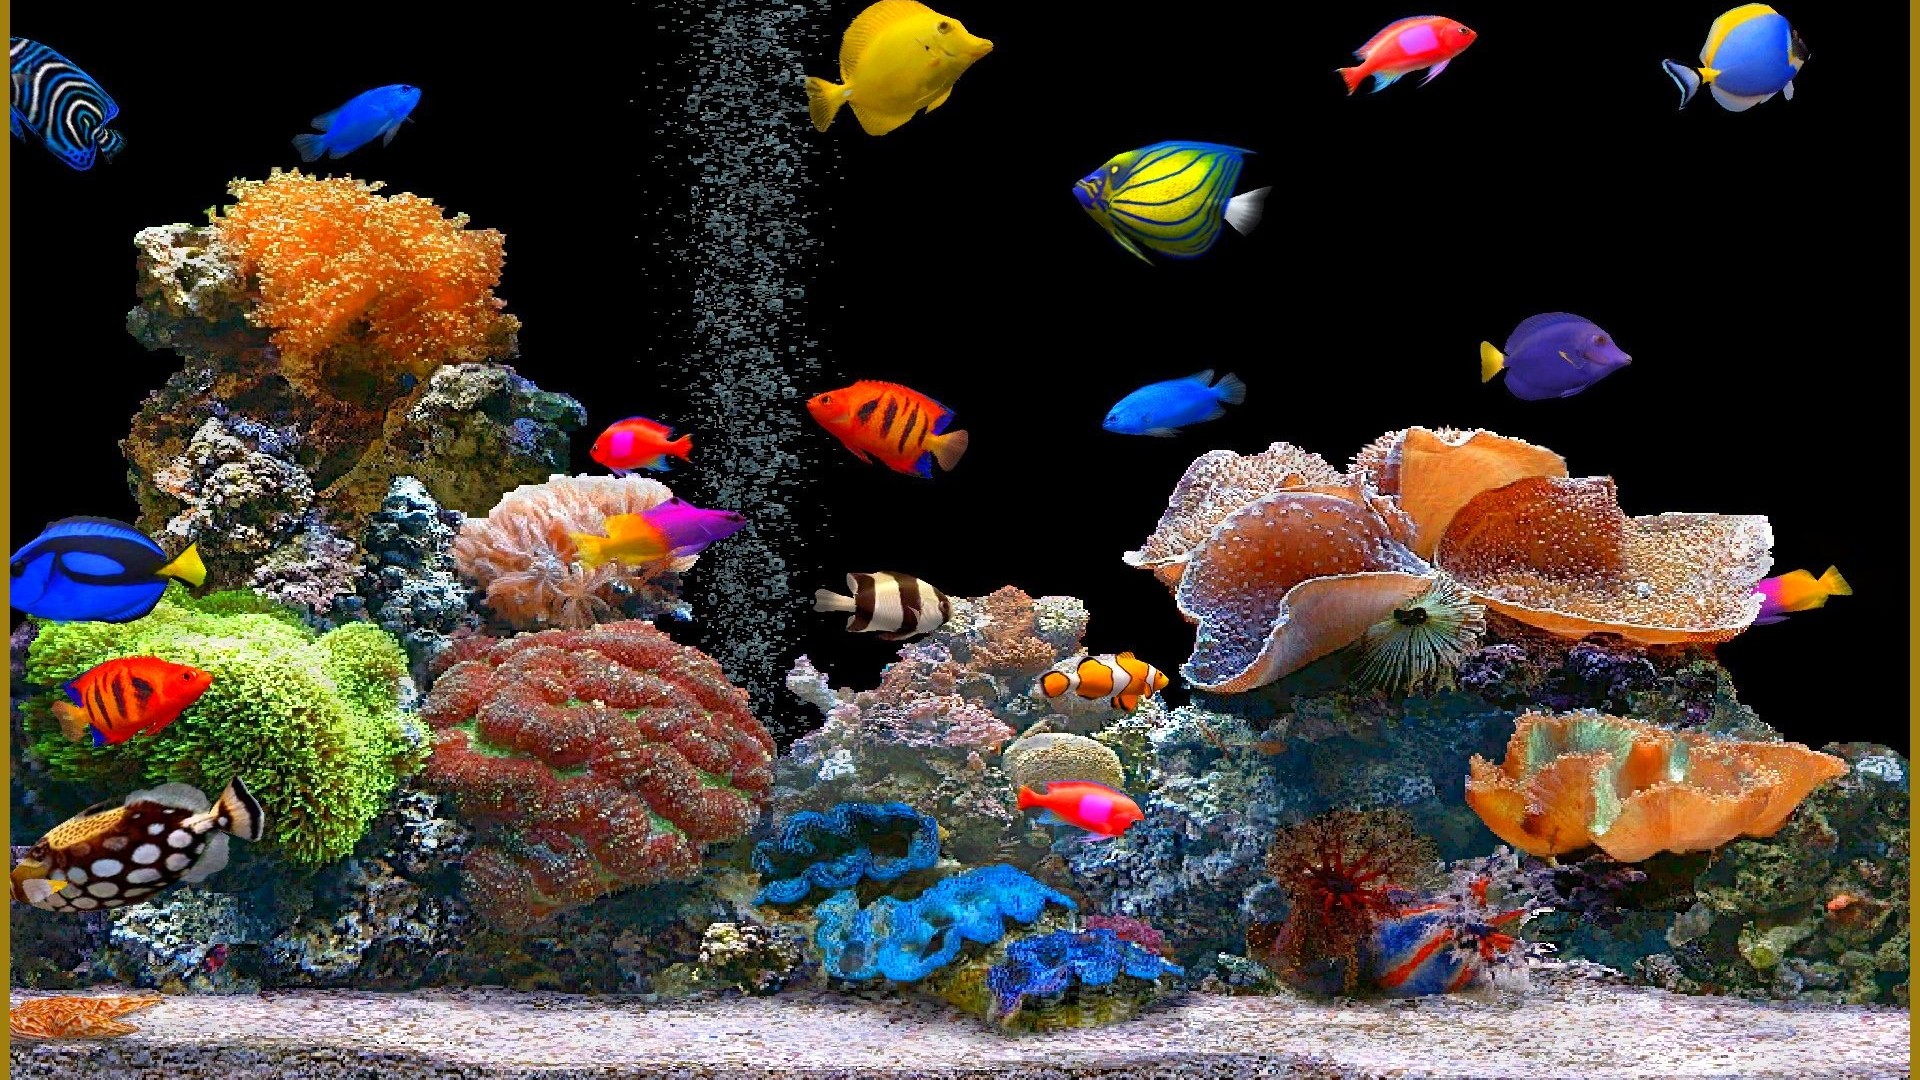 Animated Desktop Wallpaper Fish for Windows 81 All for Windows 10 1920x1080